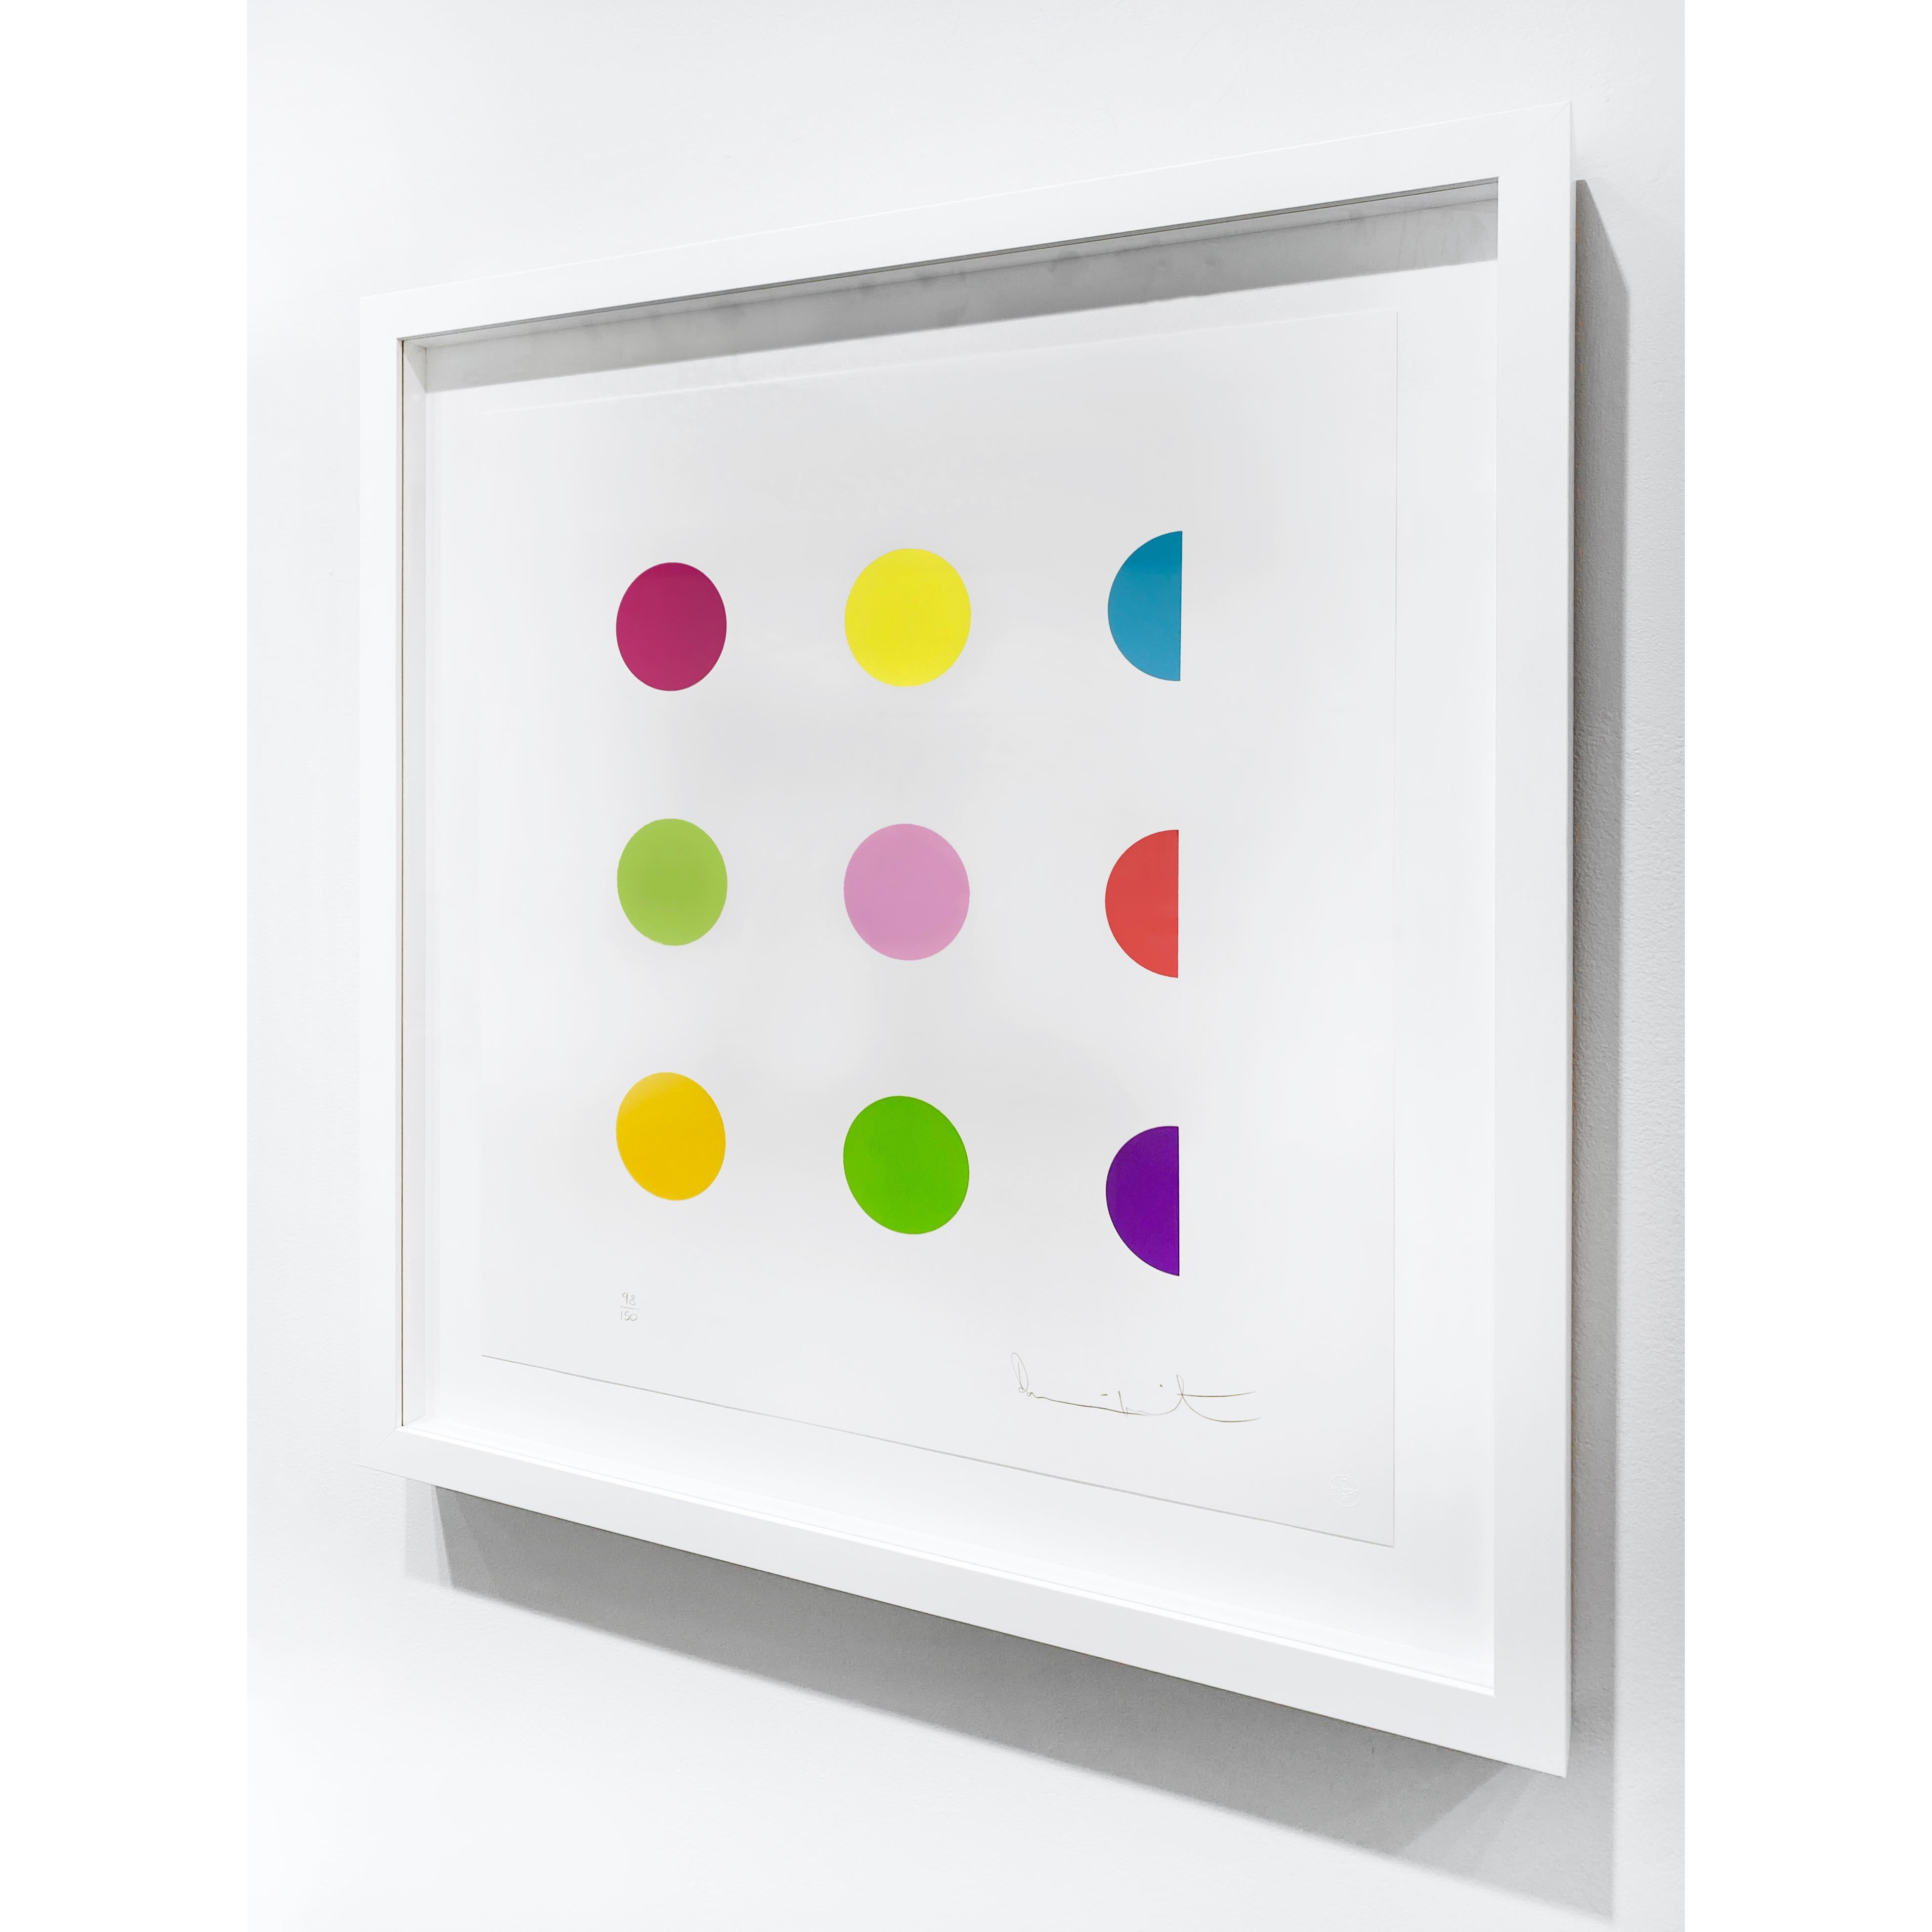 Artist:  Hirst, Damien
Title:  N-Methyl L-Aspartic Acid
Series:  Spots
Date:  2011
Medium:  Screenprint in colors, on Somerset paper, with full margins.
Unframed Dimensions:  23.5